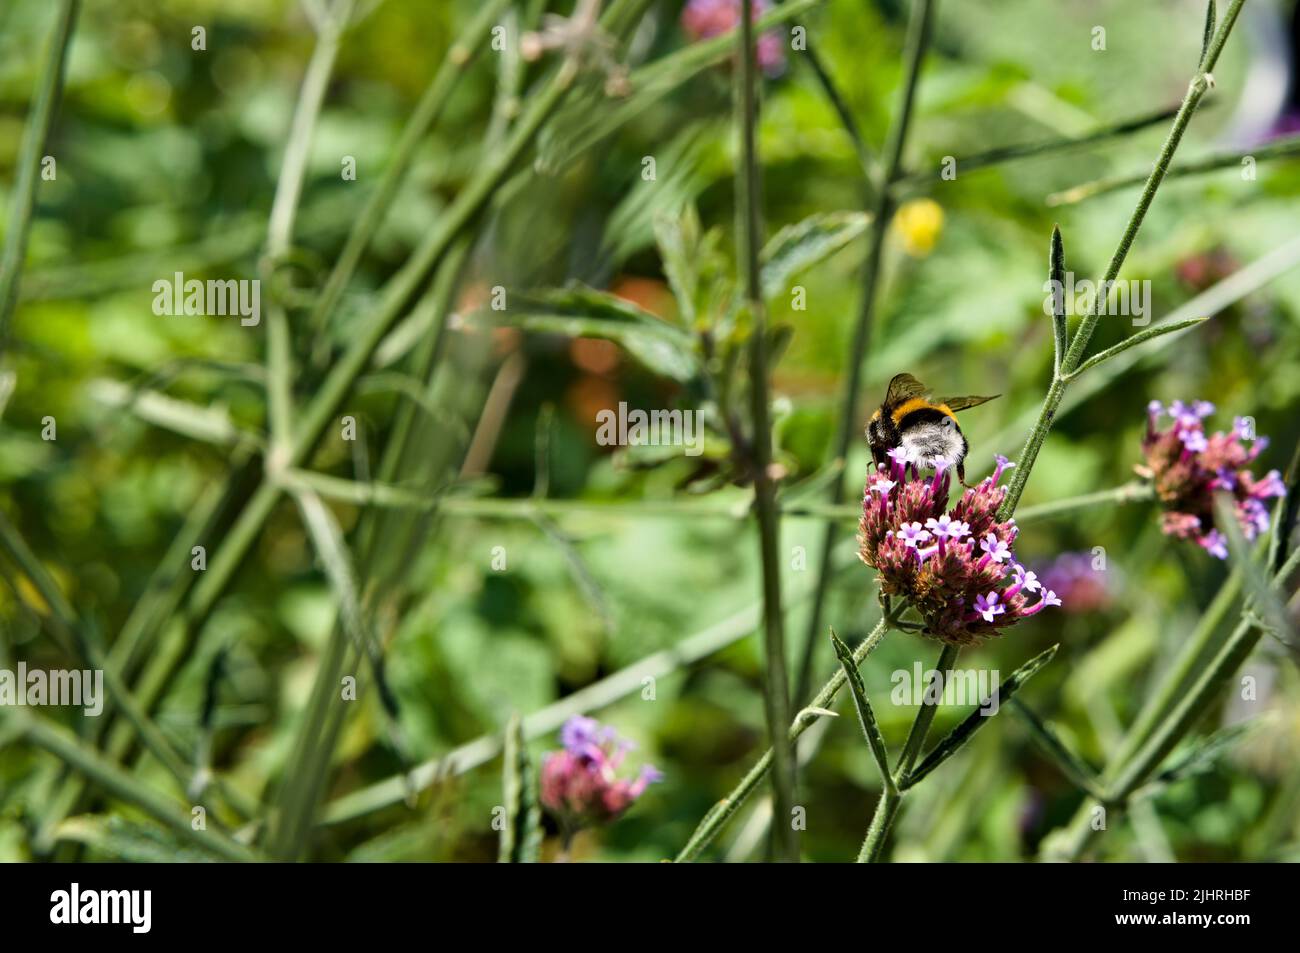 One bumblebee on flowering verbena Stock Photo